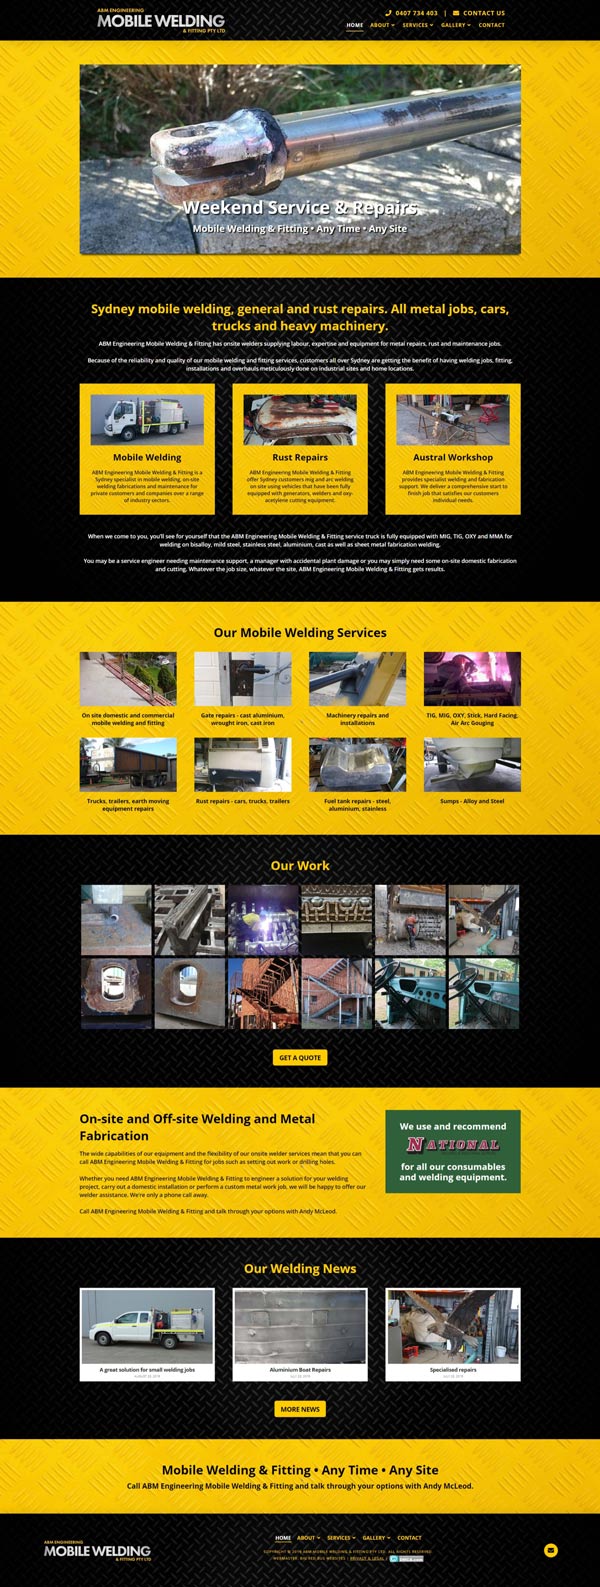 ABM Engineering Mobile Welding & Fitting website designed by Big Red Bus Websites - ezample 1